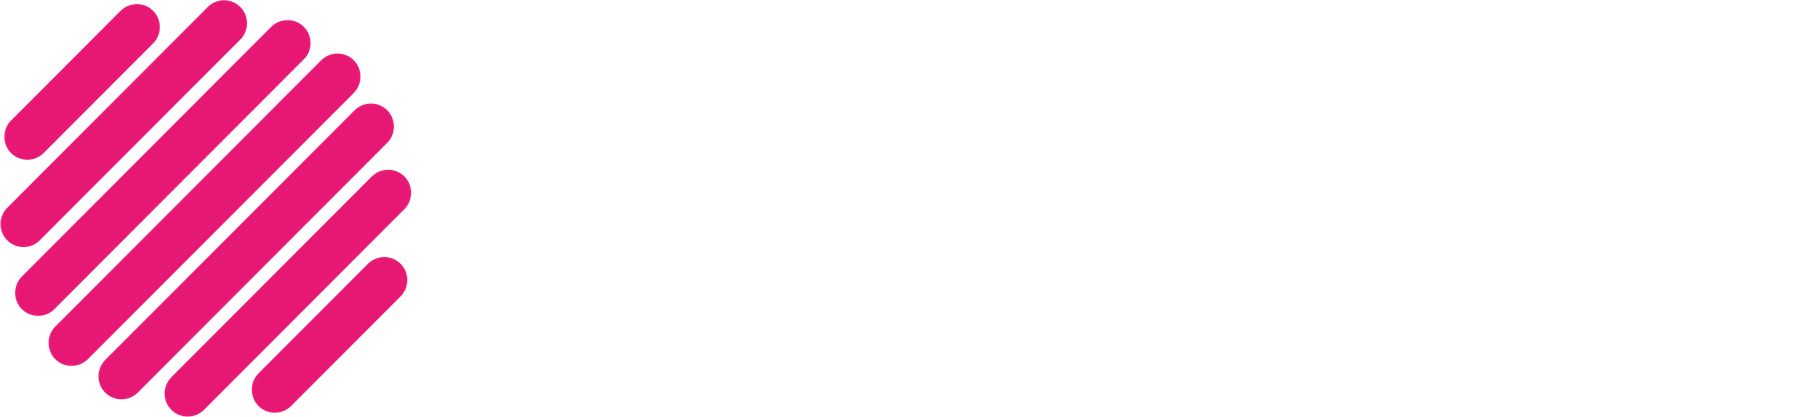 Global Social Media Awards logo